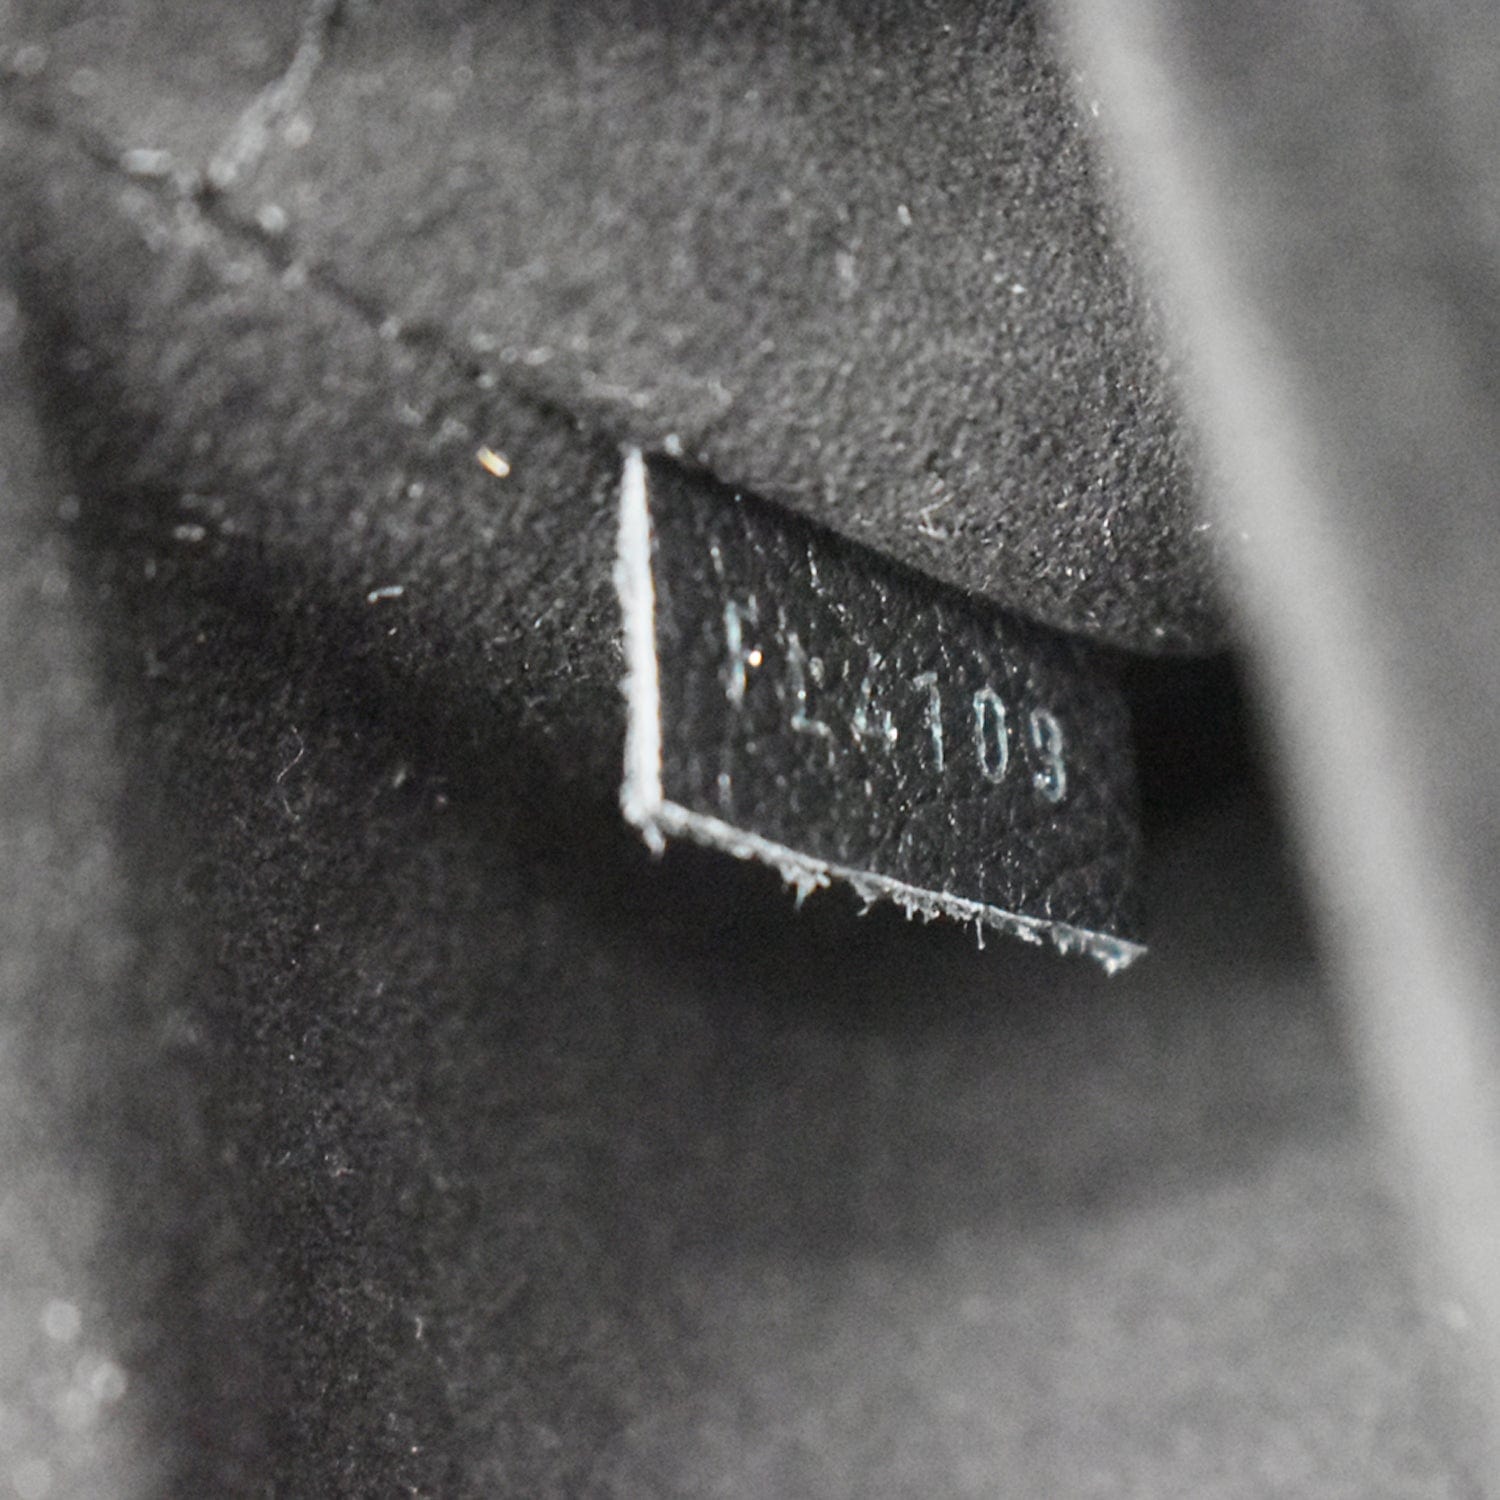 Louis Vuitton Lockme Satchel PM Python Leather